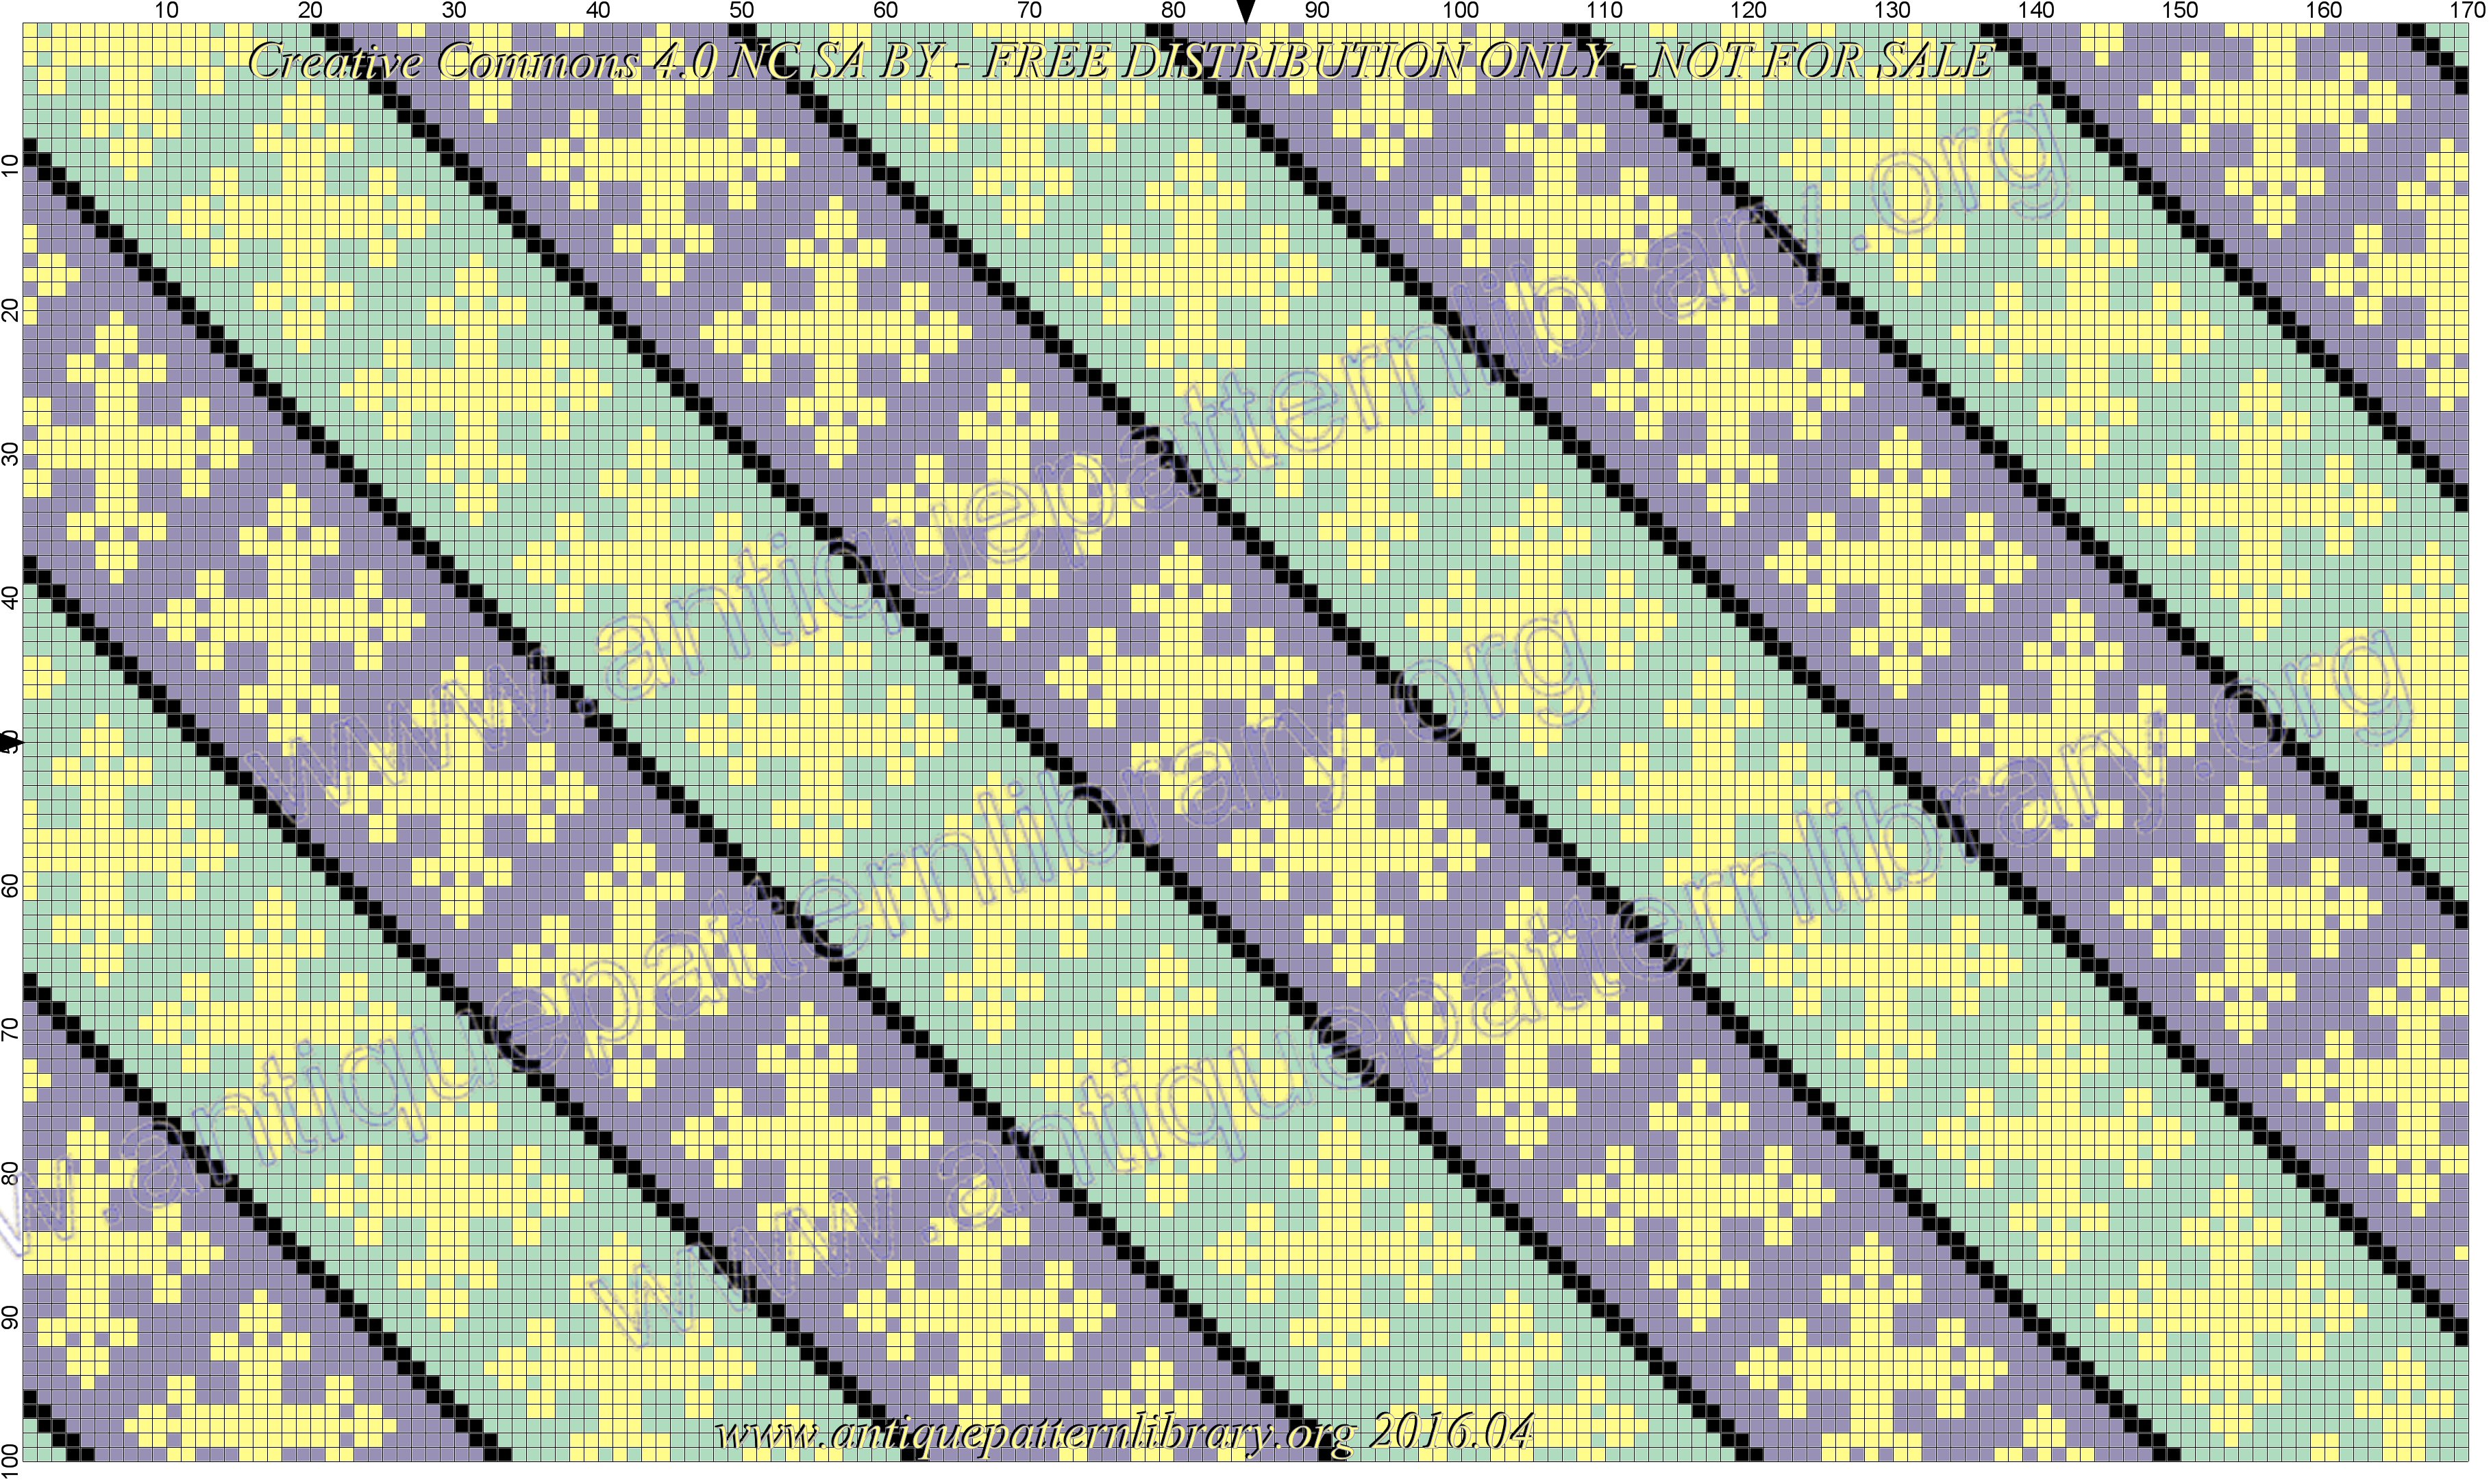 F-PT008 Heraldic cross pattern